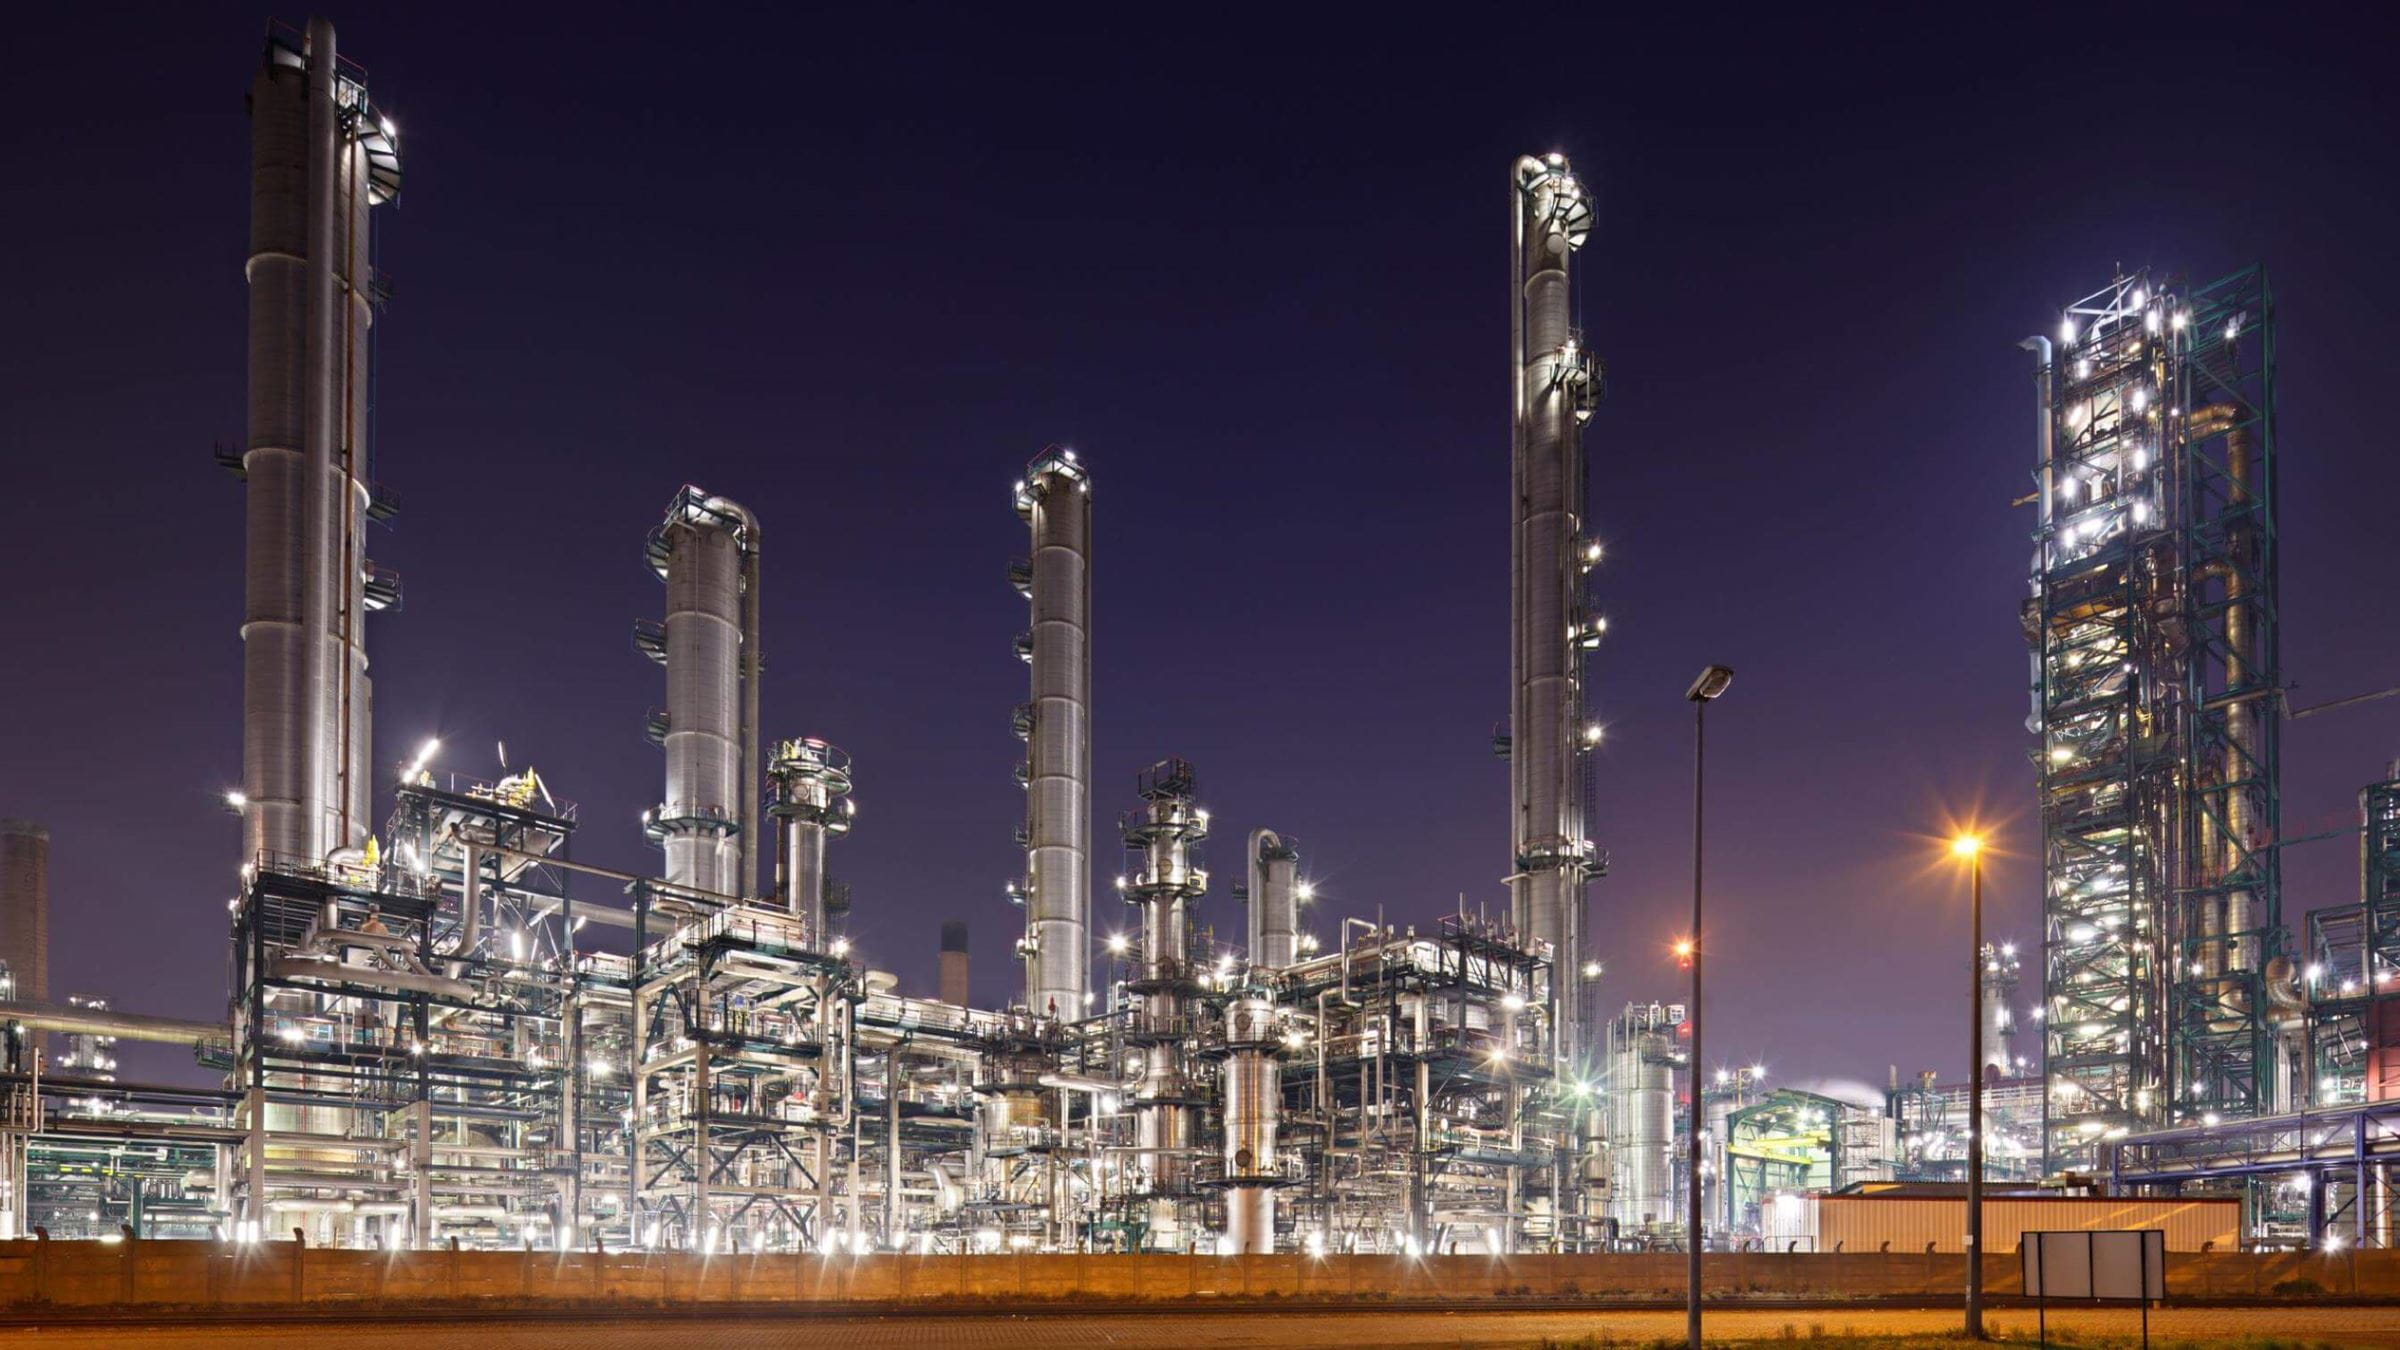 USA petrochemical refinery at night